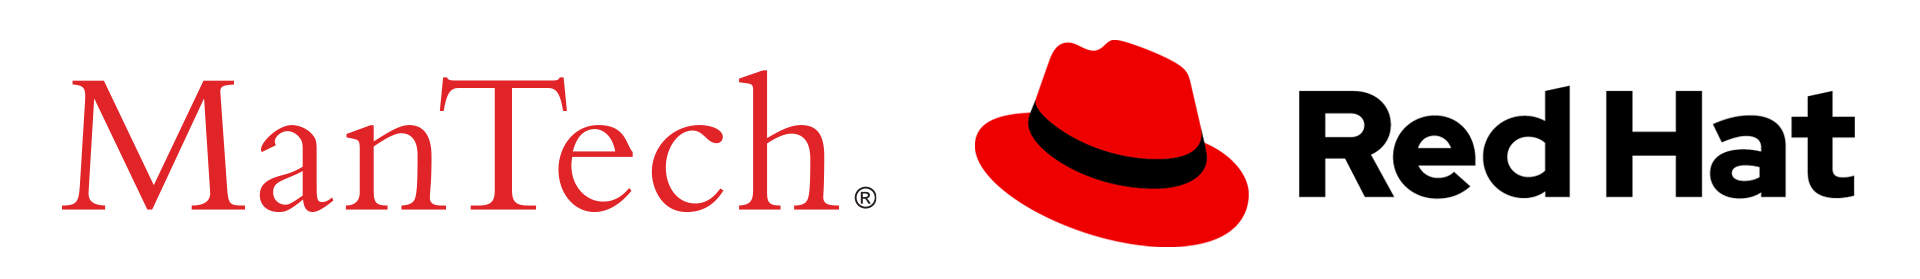 ManTech Red Hat Partnership